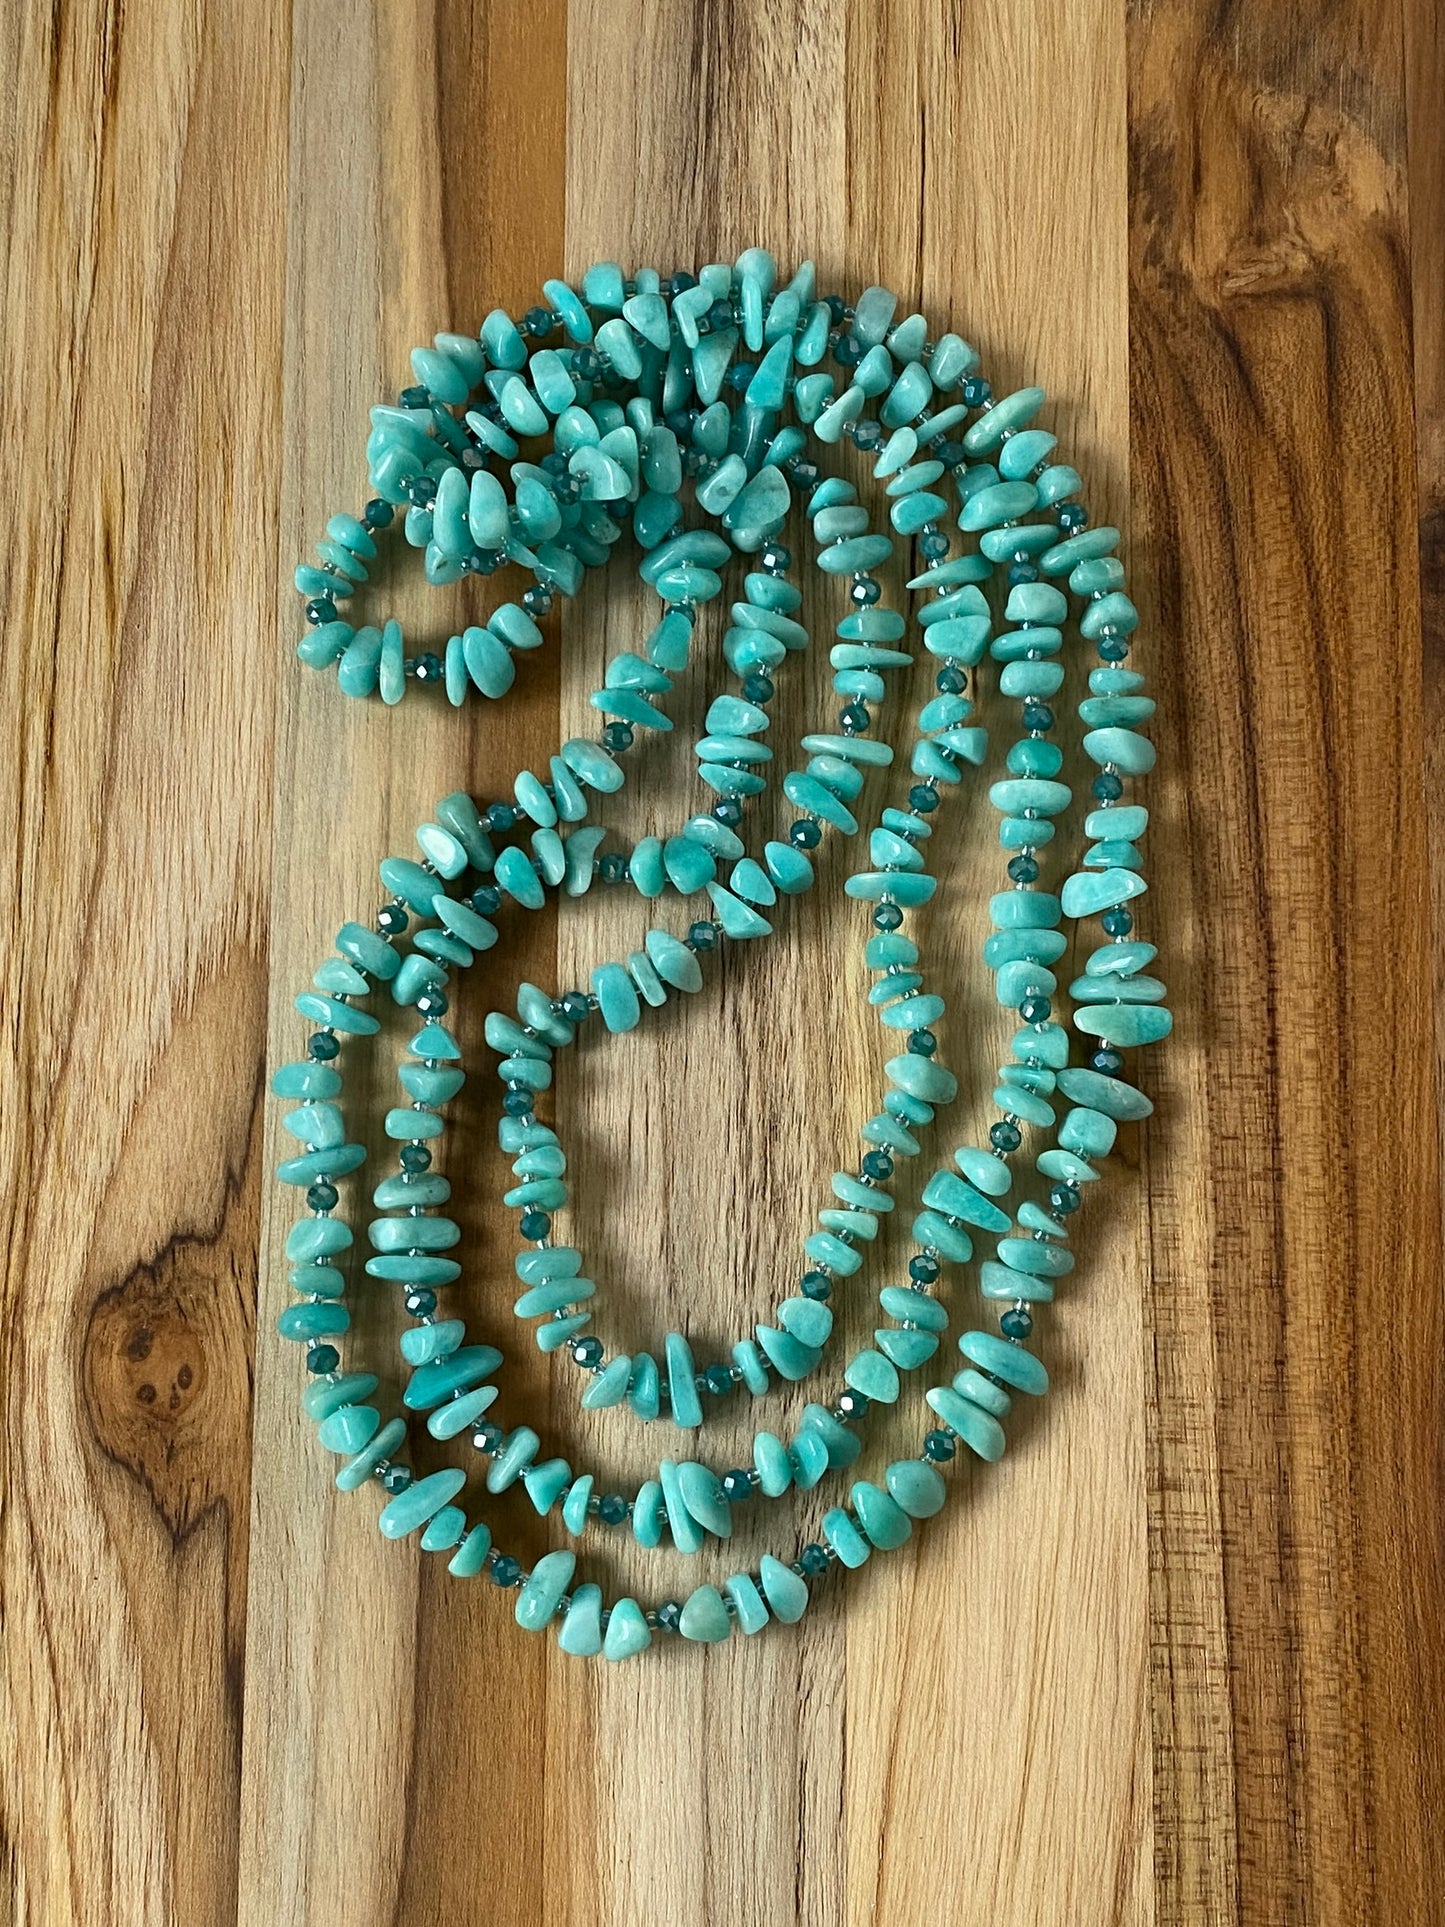 60" Extra Long Beaded Wraparound Amazonite Chip Bead Necklace with Crystal Beads My Urban Gems